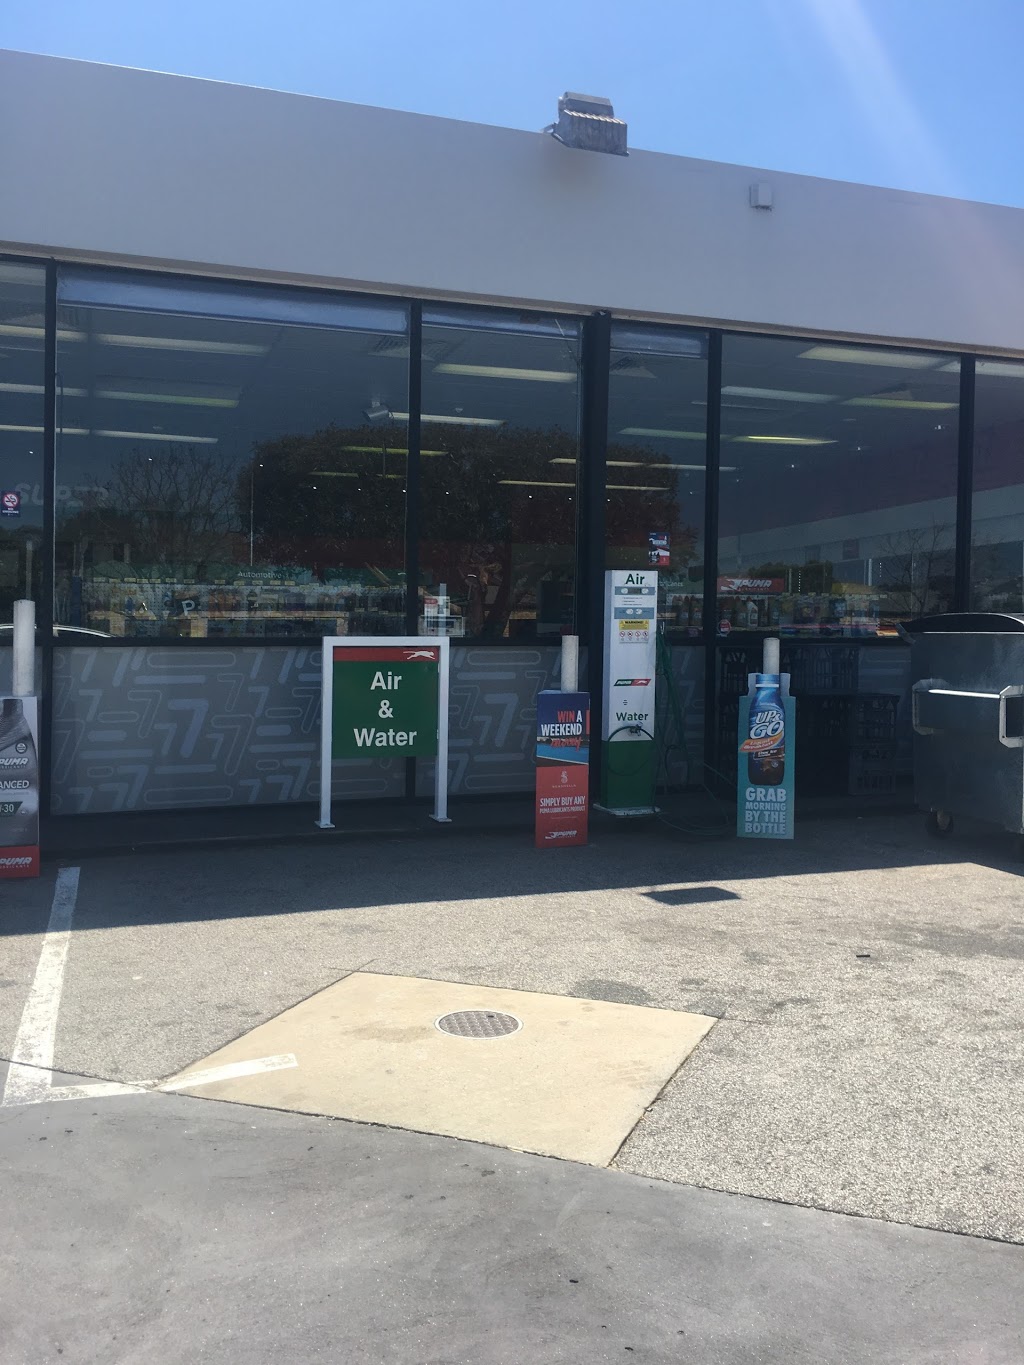 Puma Gwelup | gas station | 1 Wishart St, Gwelup WA 6018, Australia | 0892042357 OR +61 8 9204 2357